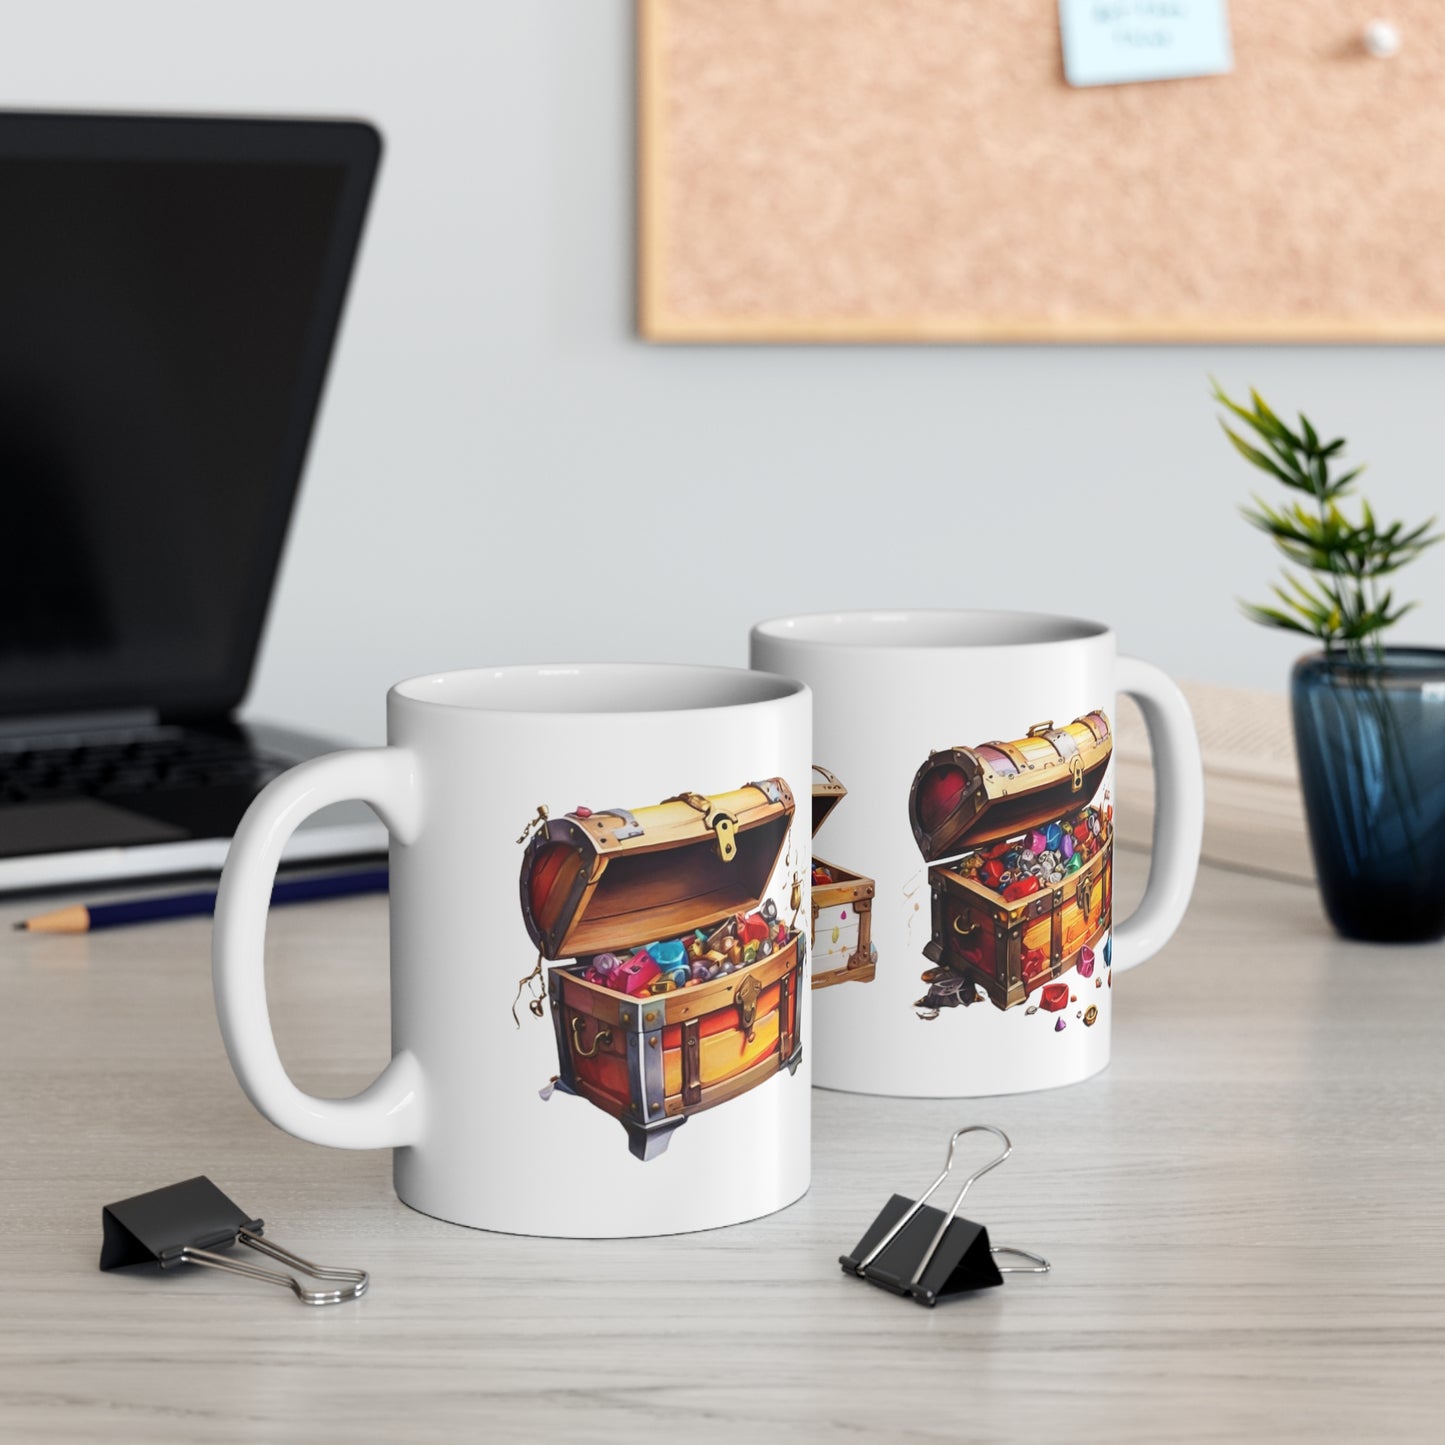 Treasure Chests Mug - Ceramic Coffee Mug 11oz